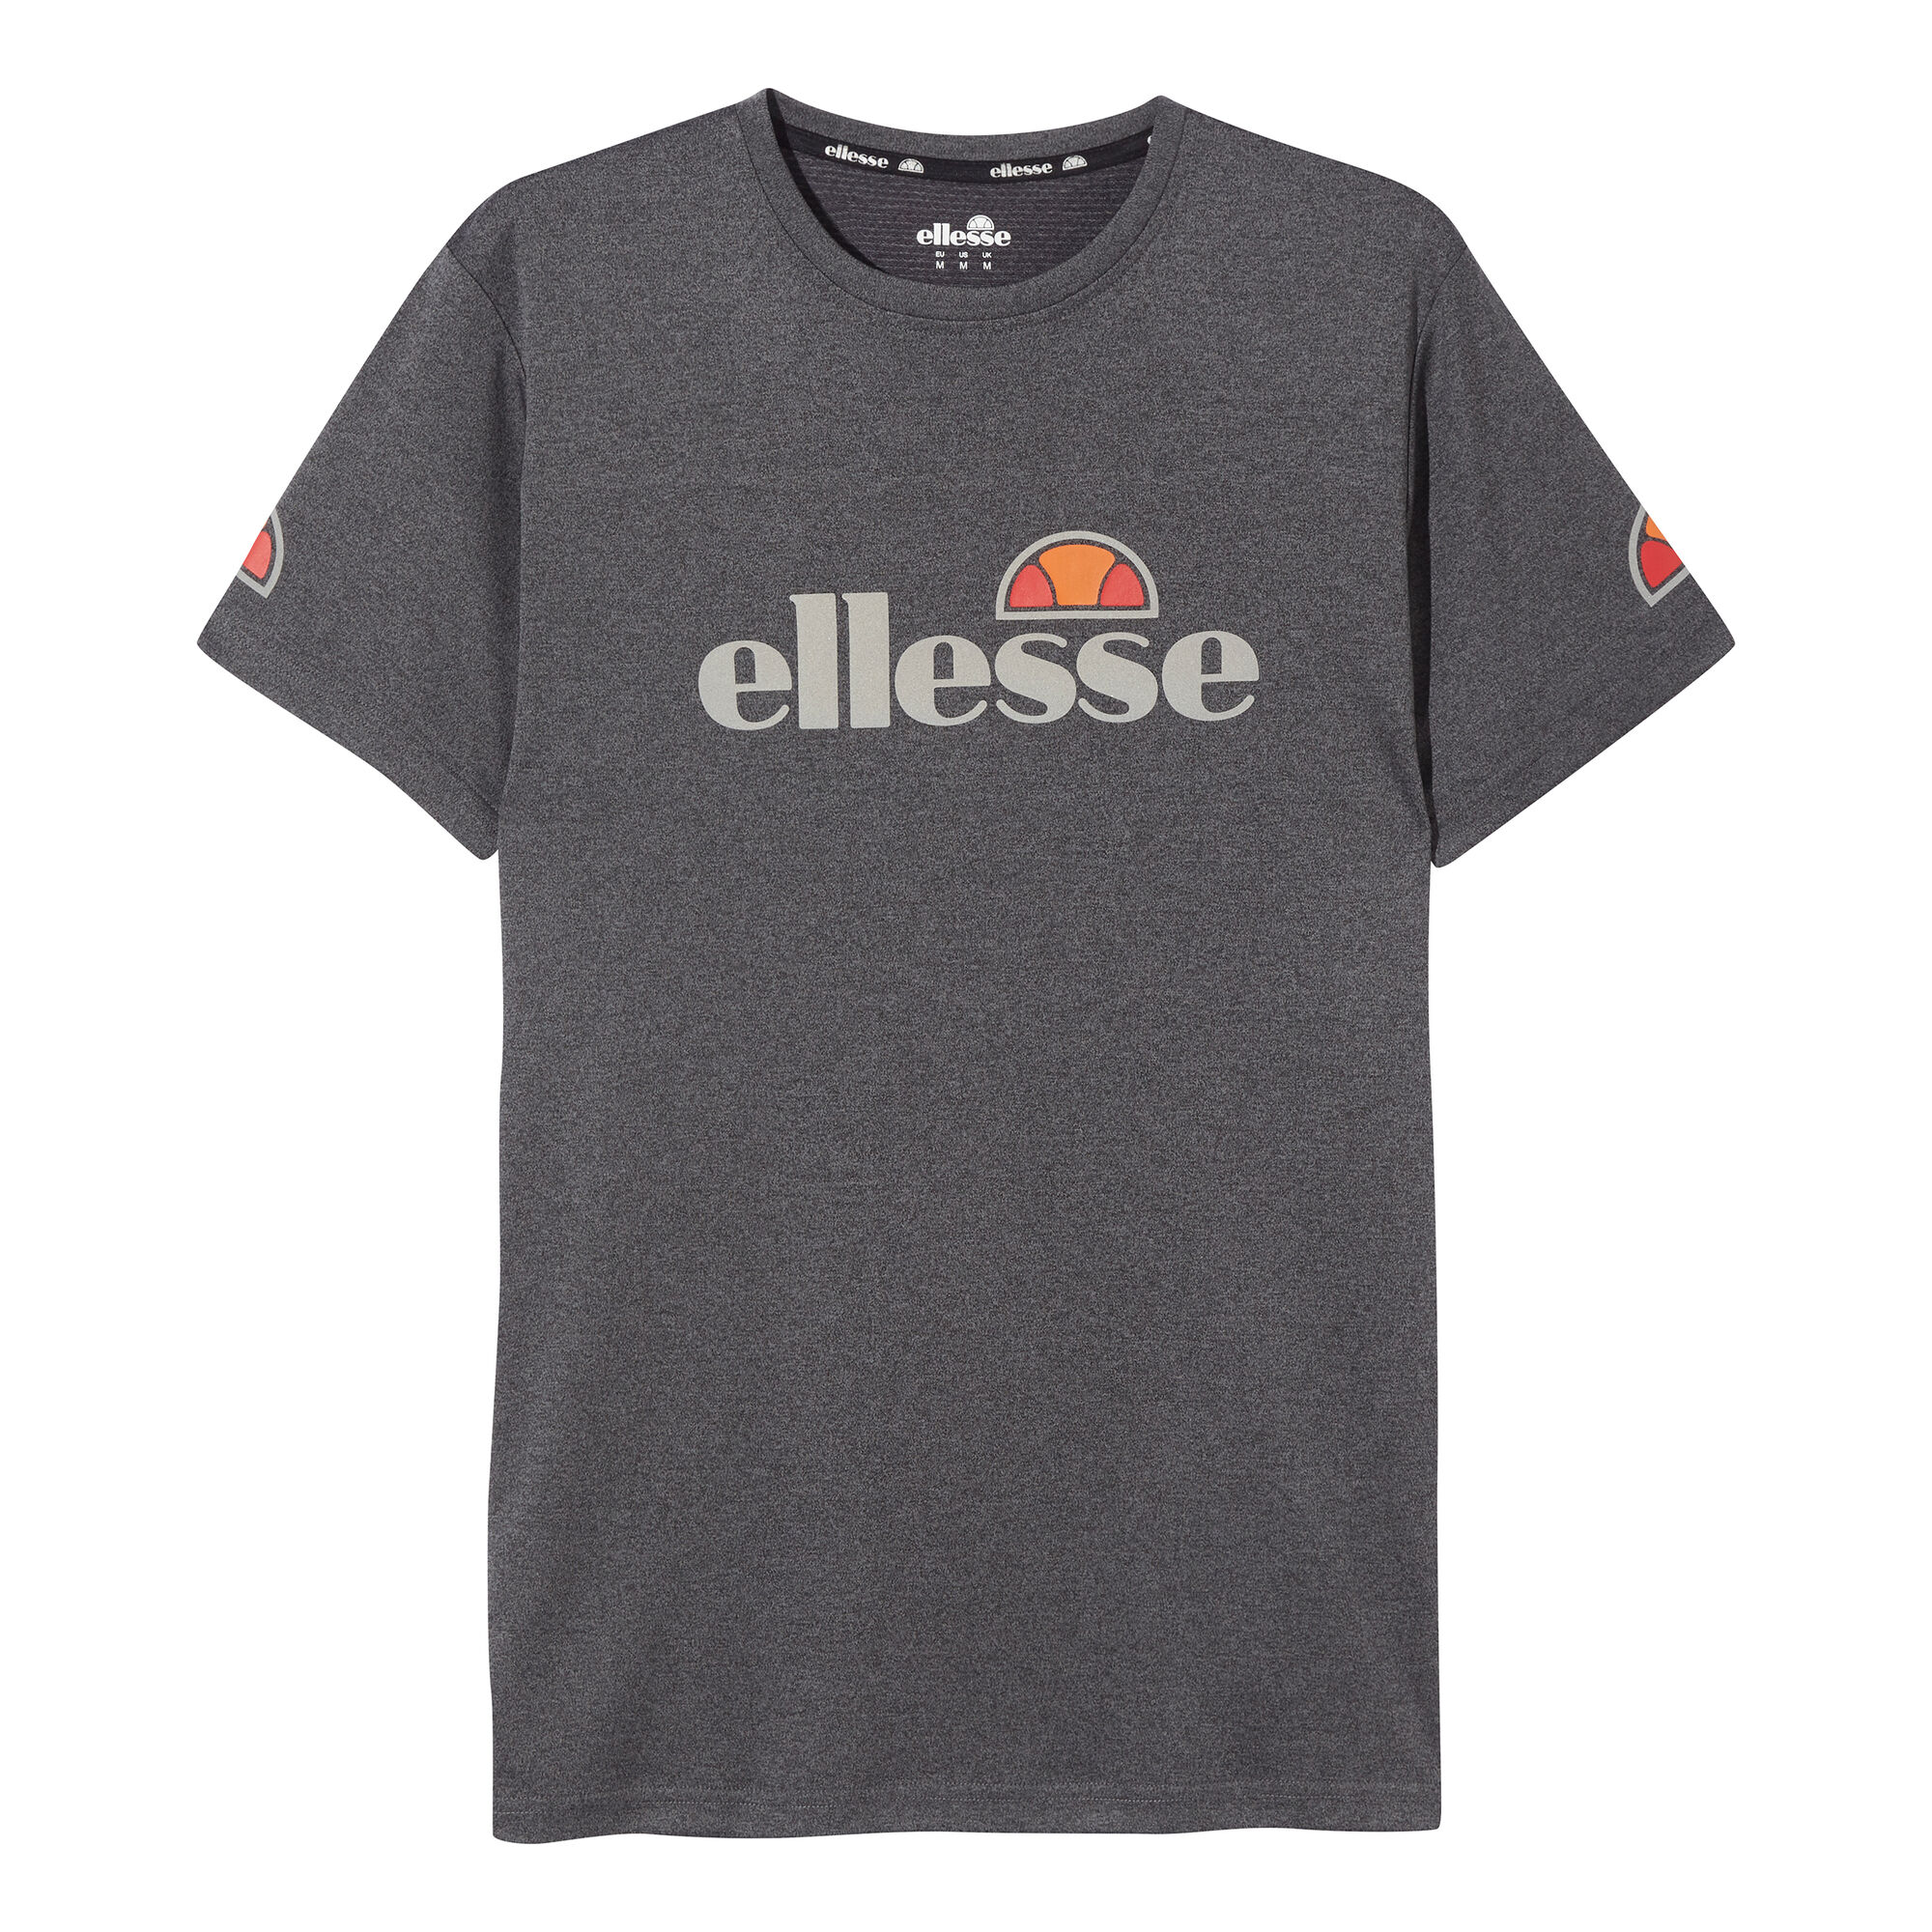 Buy Ellesse Sammeti T-Shirt Men Dark Grey, Silver online | Tennis Point UK